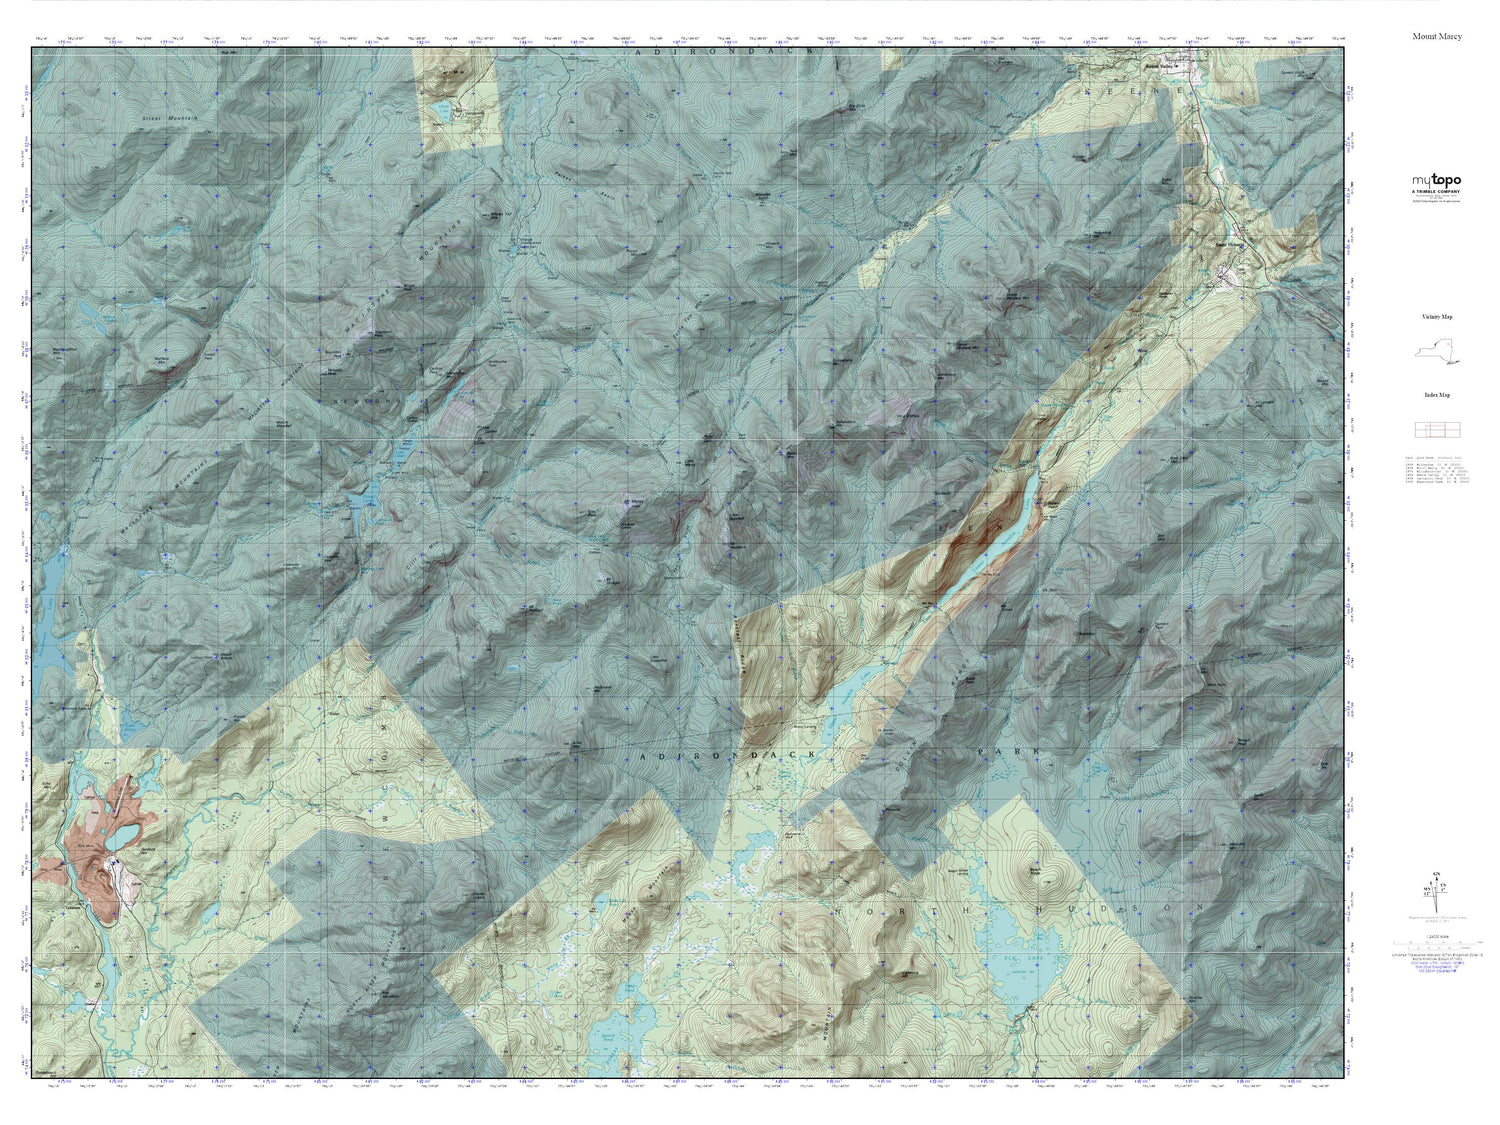 Mount Marcy MyTopo Explorer Series Map Image